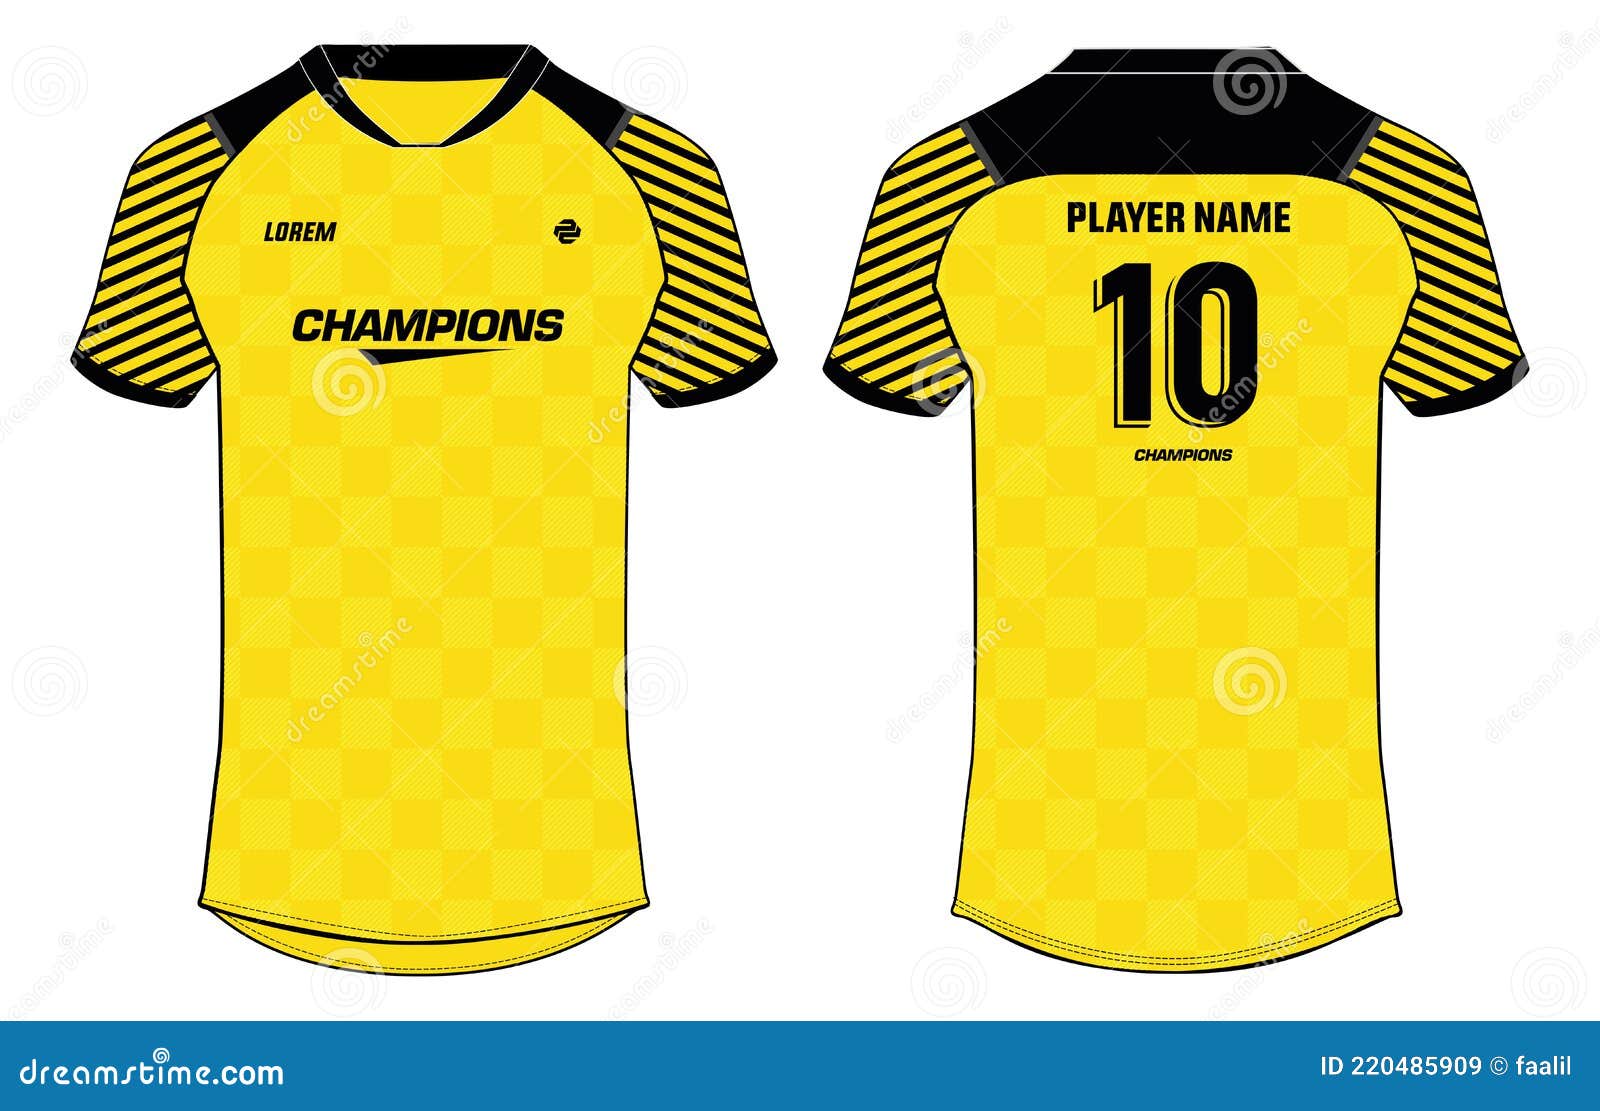 Sports t shirt design football jersey concept Vector Image